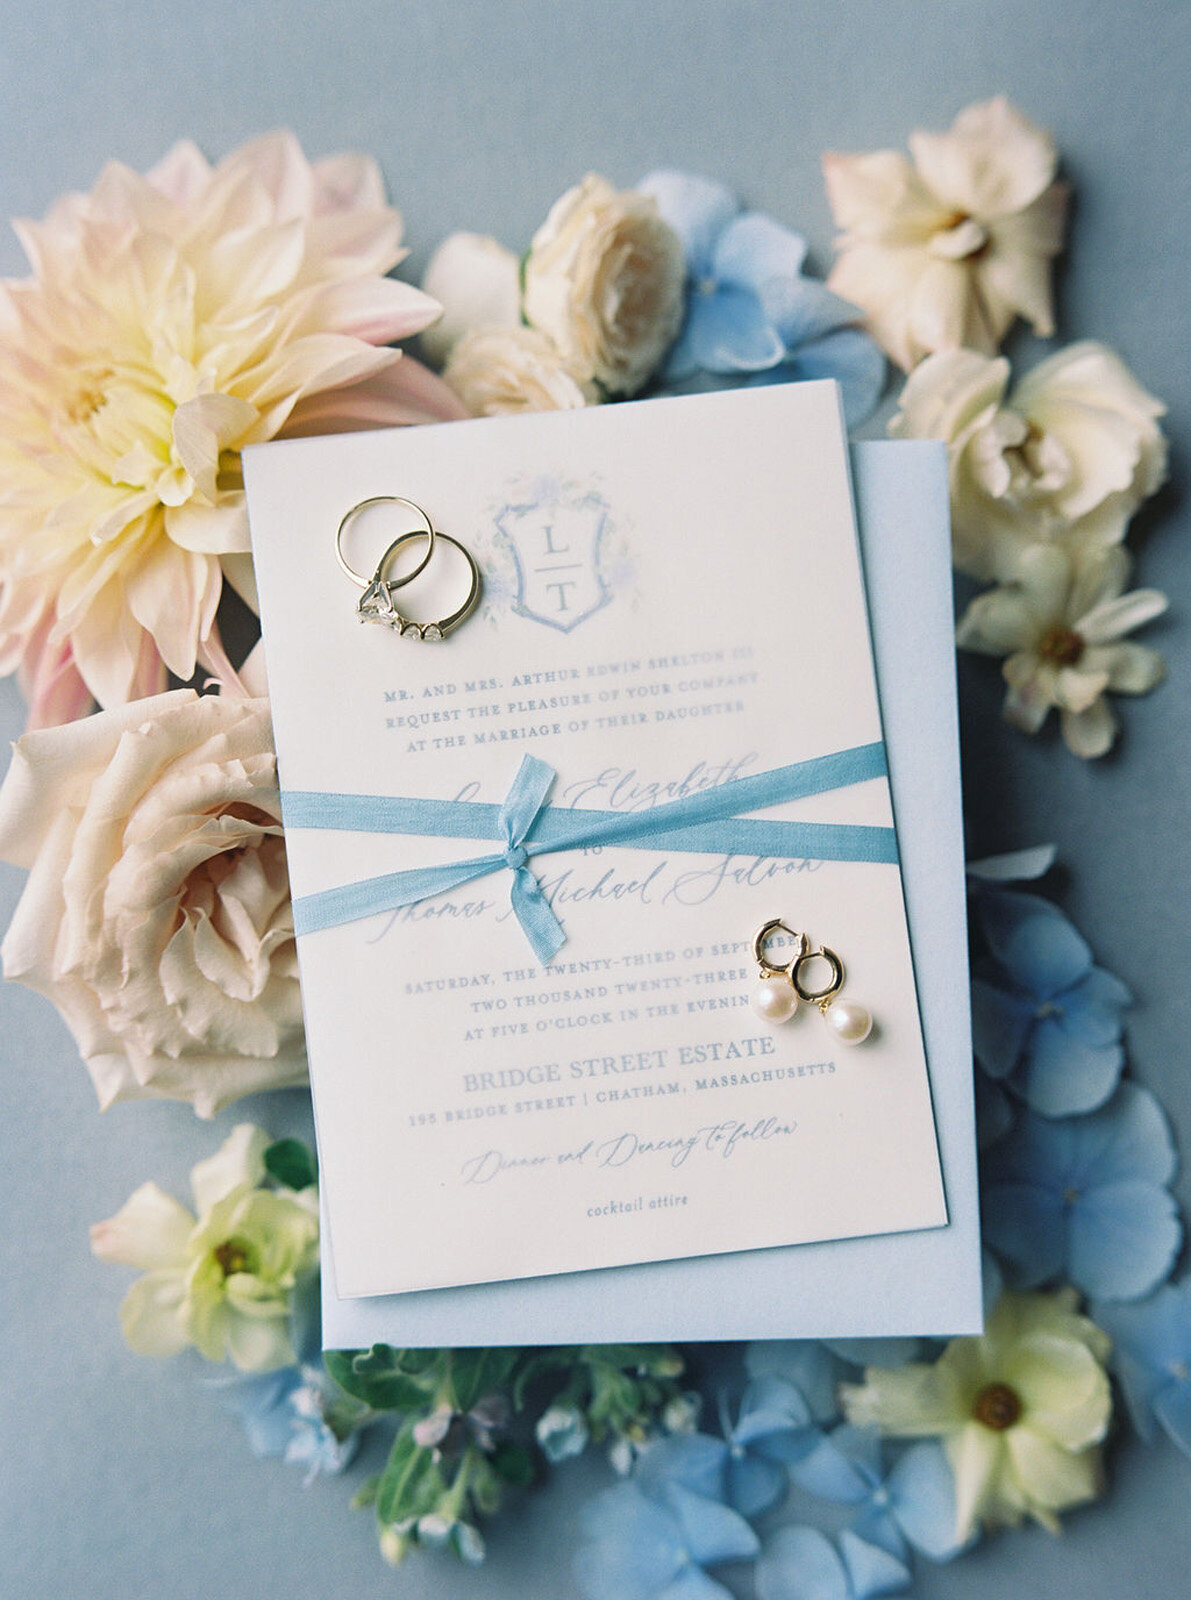 Kate_Murtaugh_Events_Cape_Cod_tented_wedding_invitation_rings